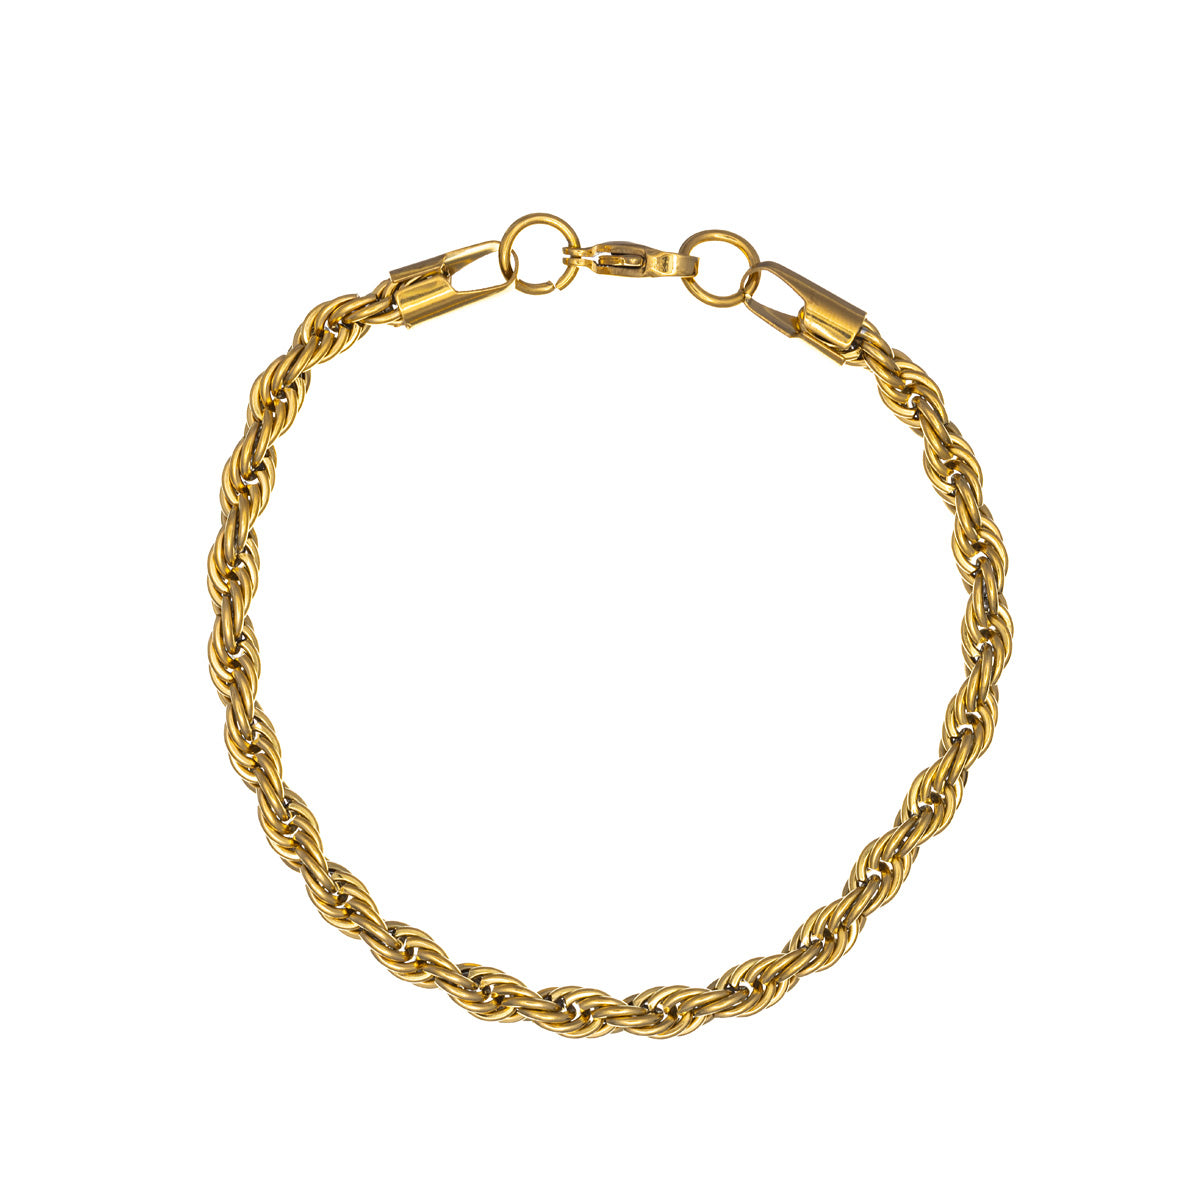 Rope chain bracelet cordell-chain 5mm 22cm (Steel 316L)